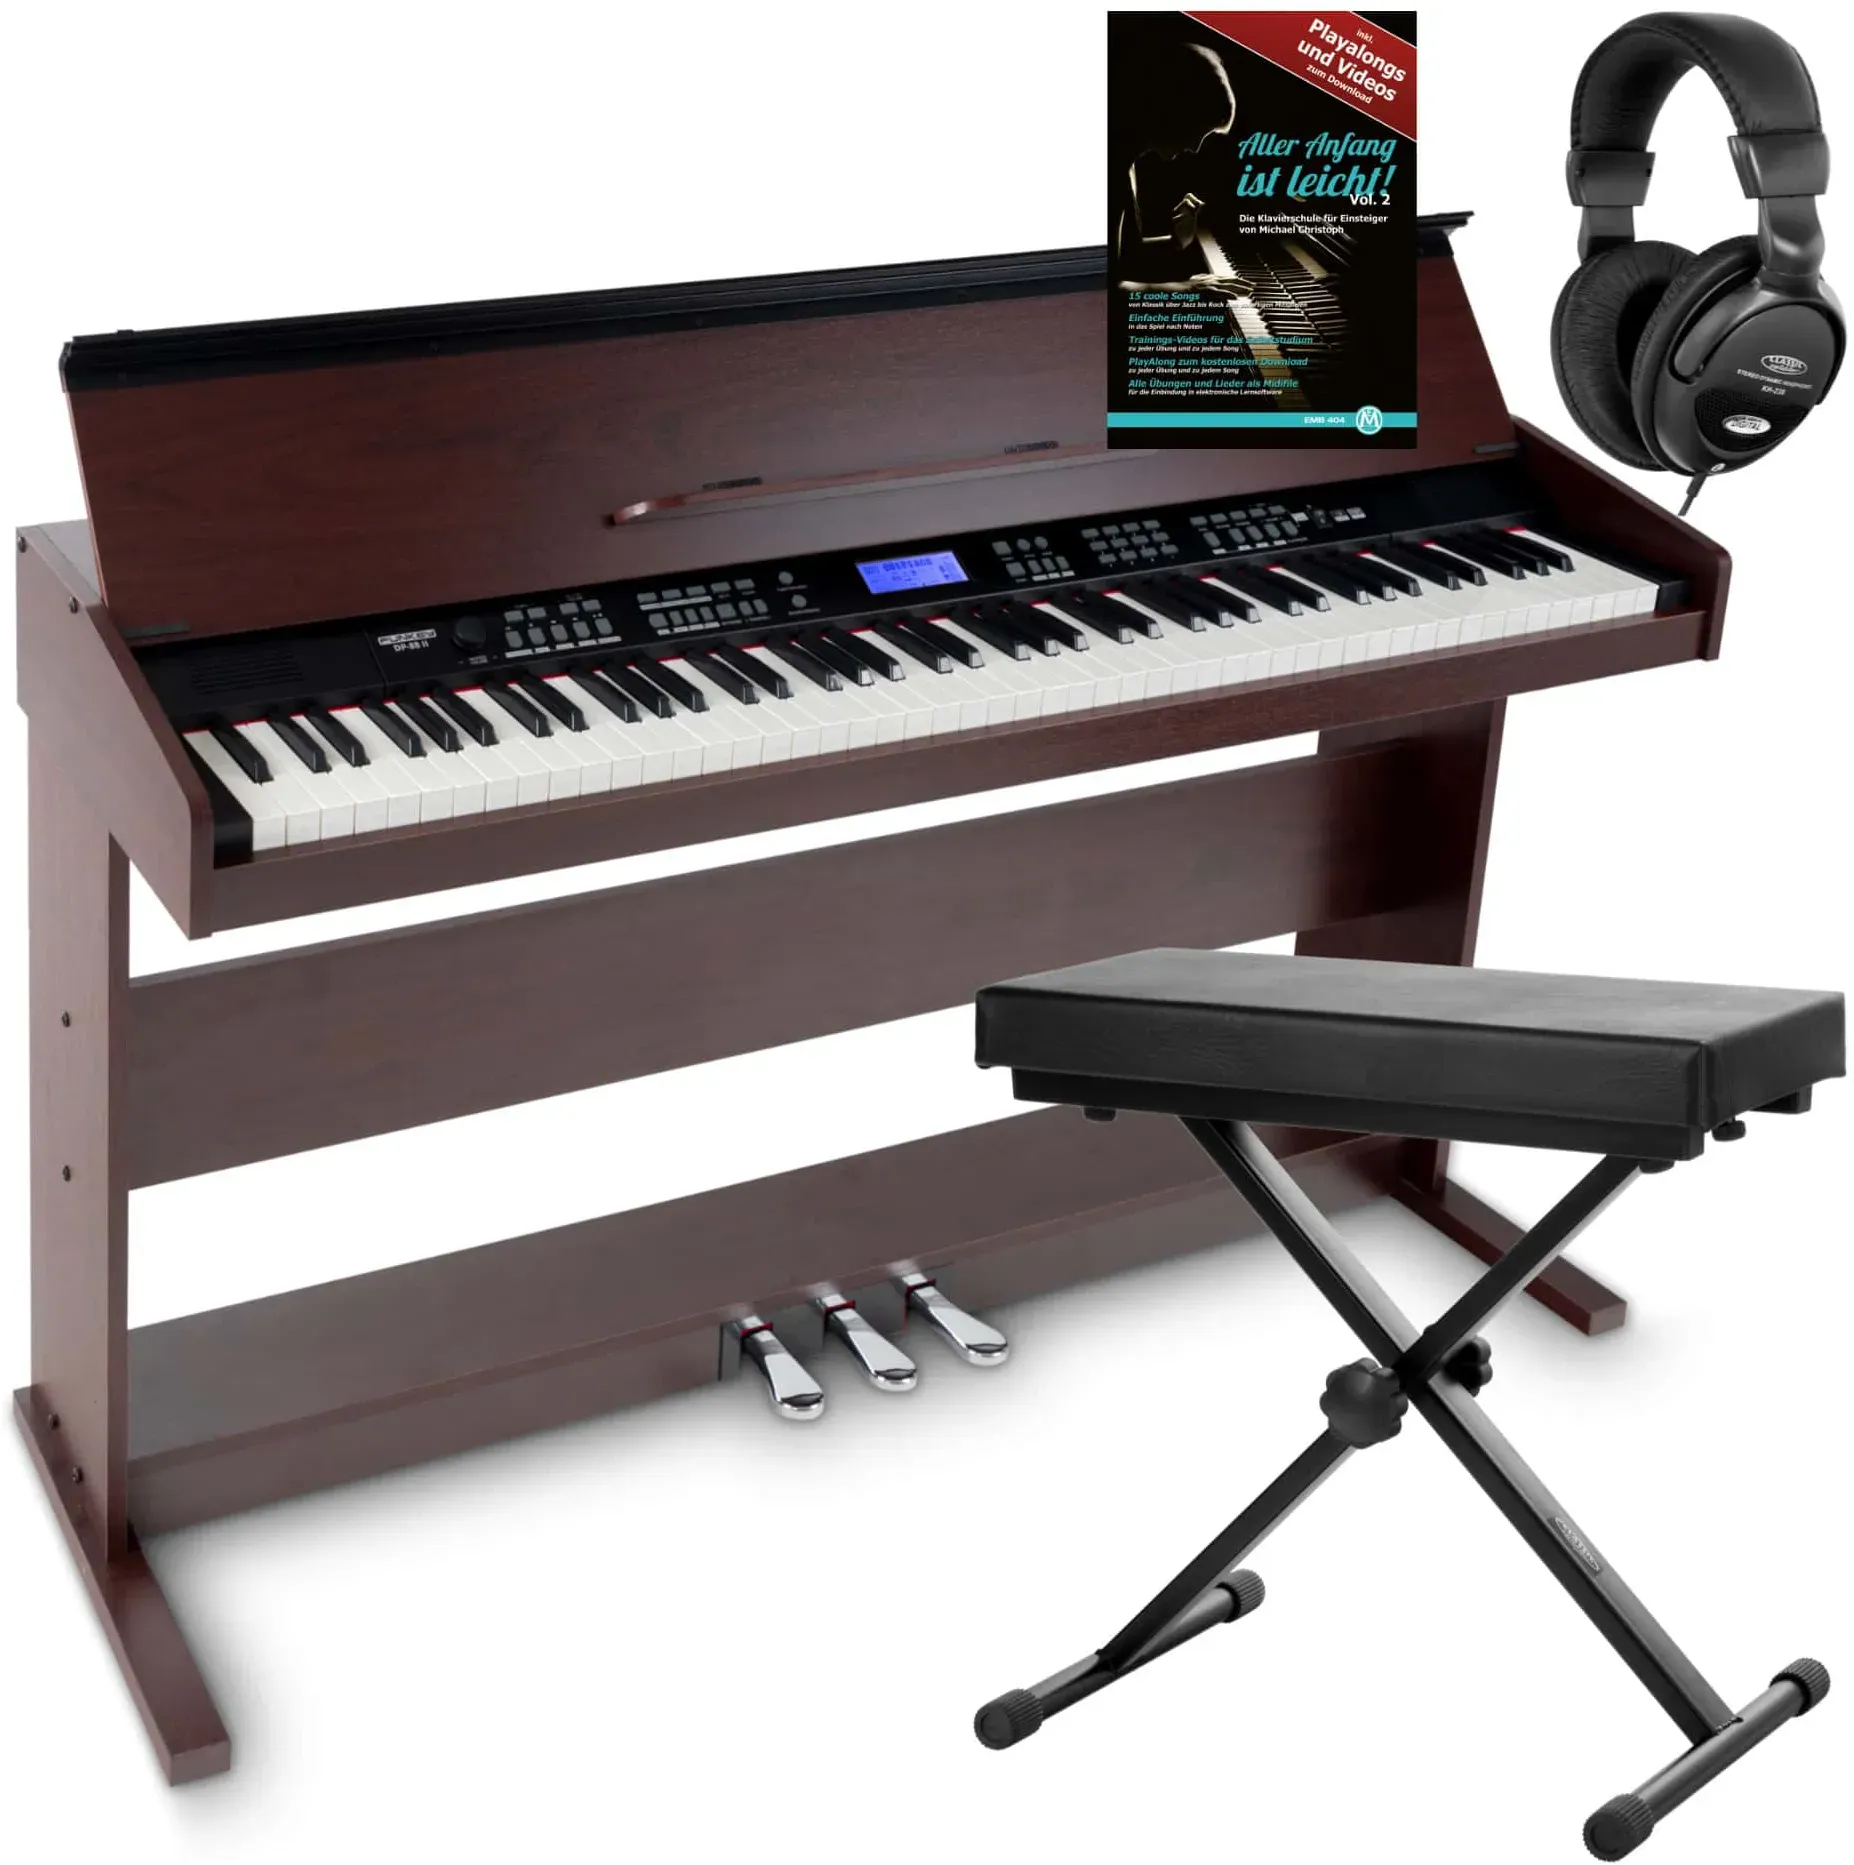 FunKey DP-88 II Digitalpiano braun Set mit Keyboardbank, Kopfhörer und Klavierschule